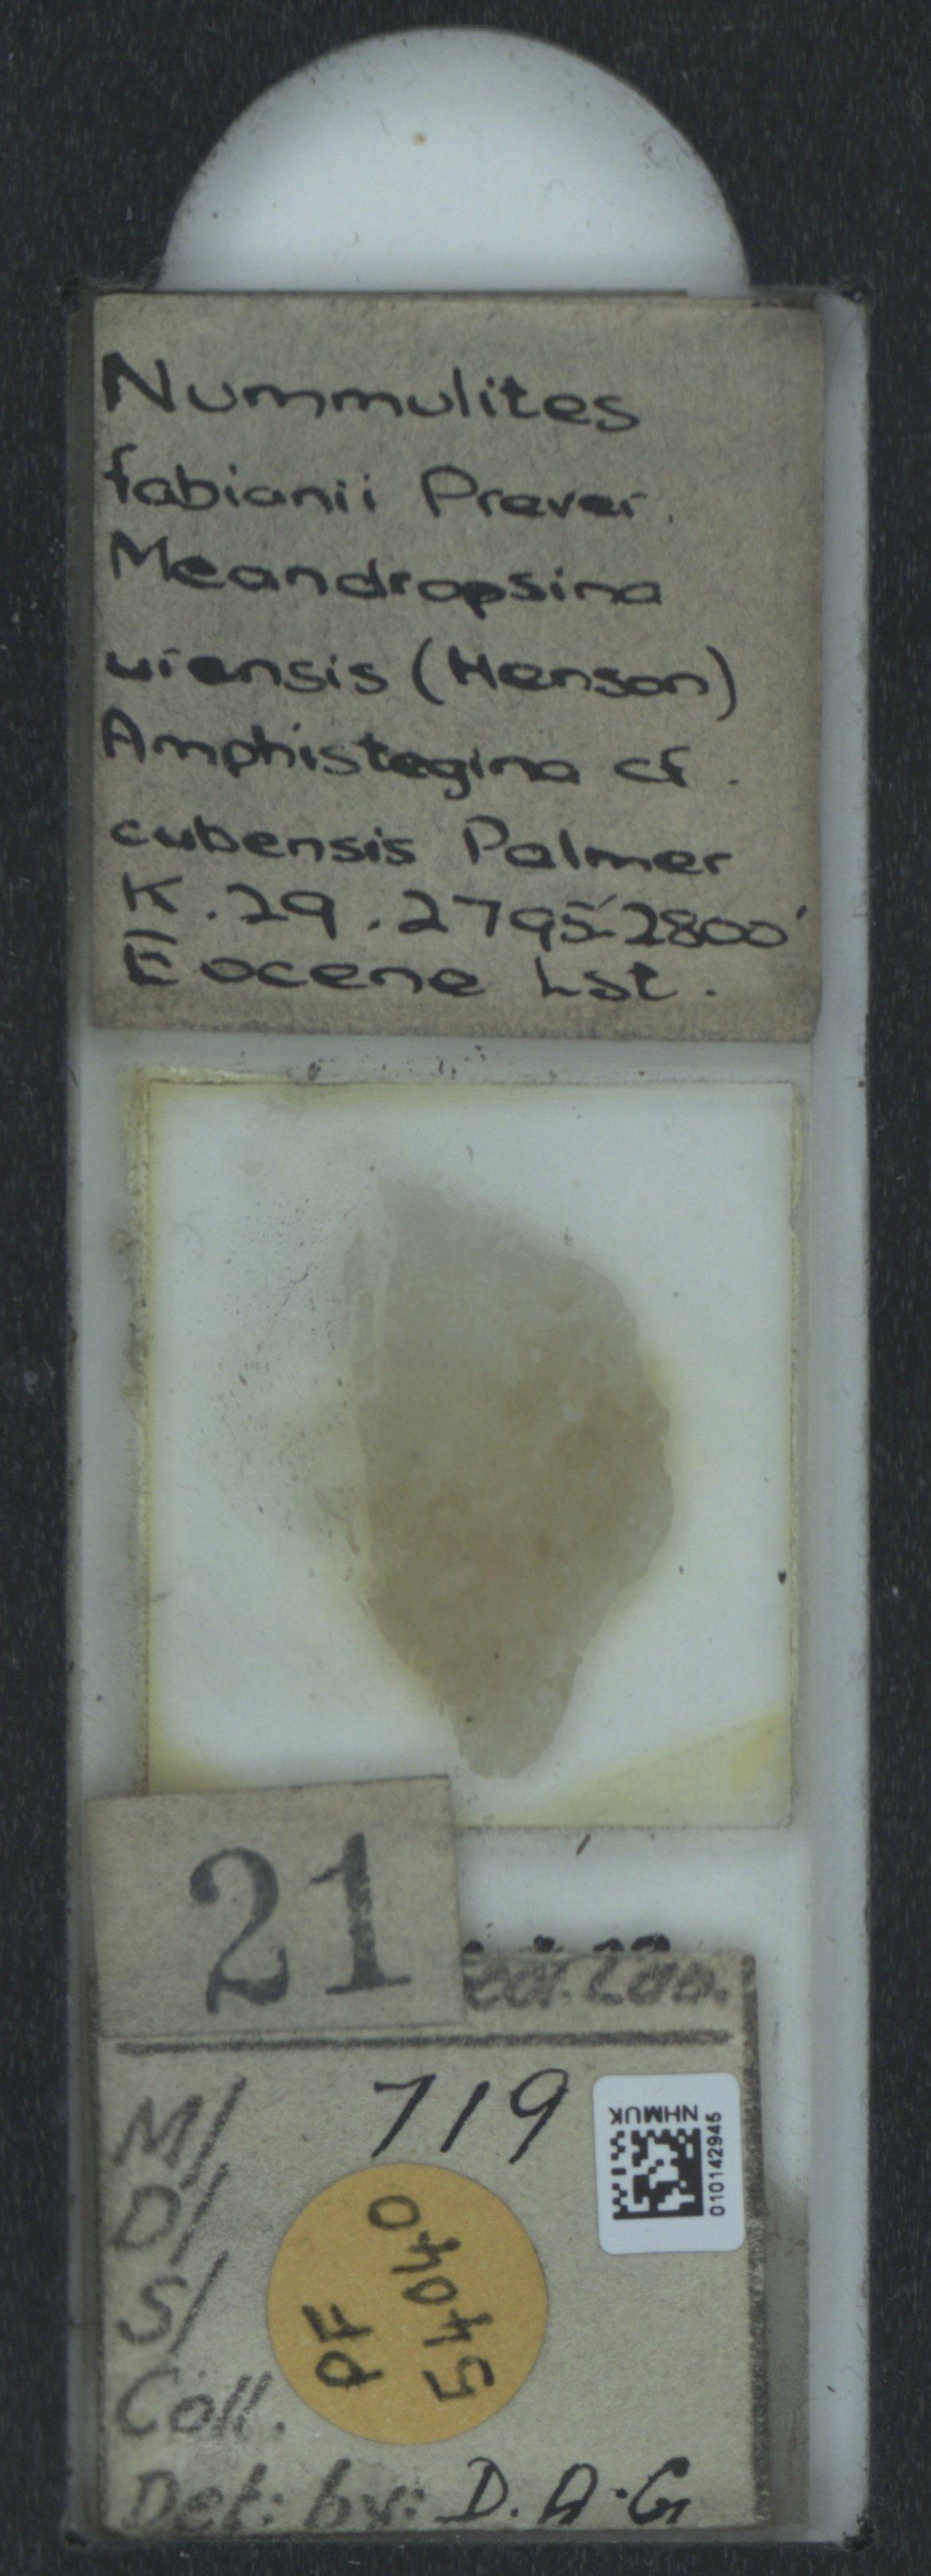 To NHMUK collection (Amphistegina cubensis Palmer, 1934; NHMUK:ecatalogue:2032547)